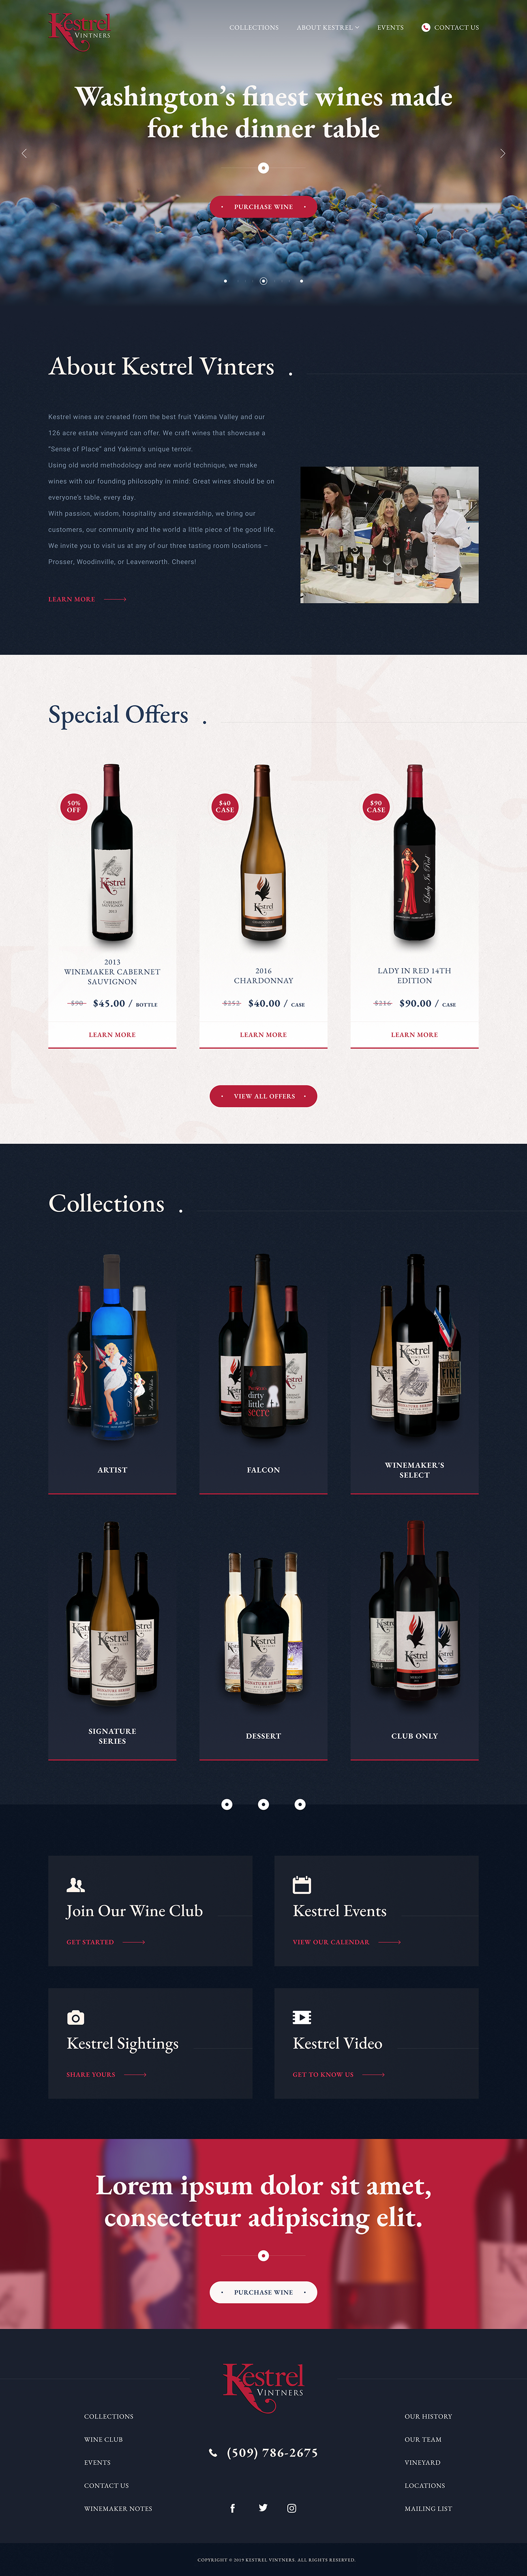 Kestrel Vintners Winery Home Page Design Desktop